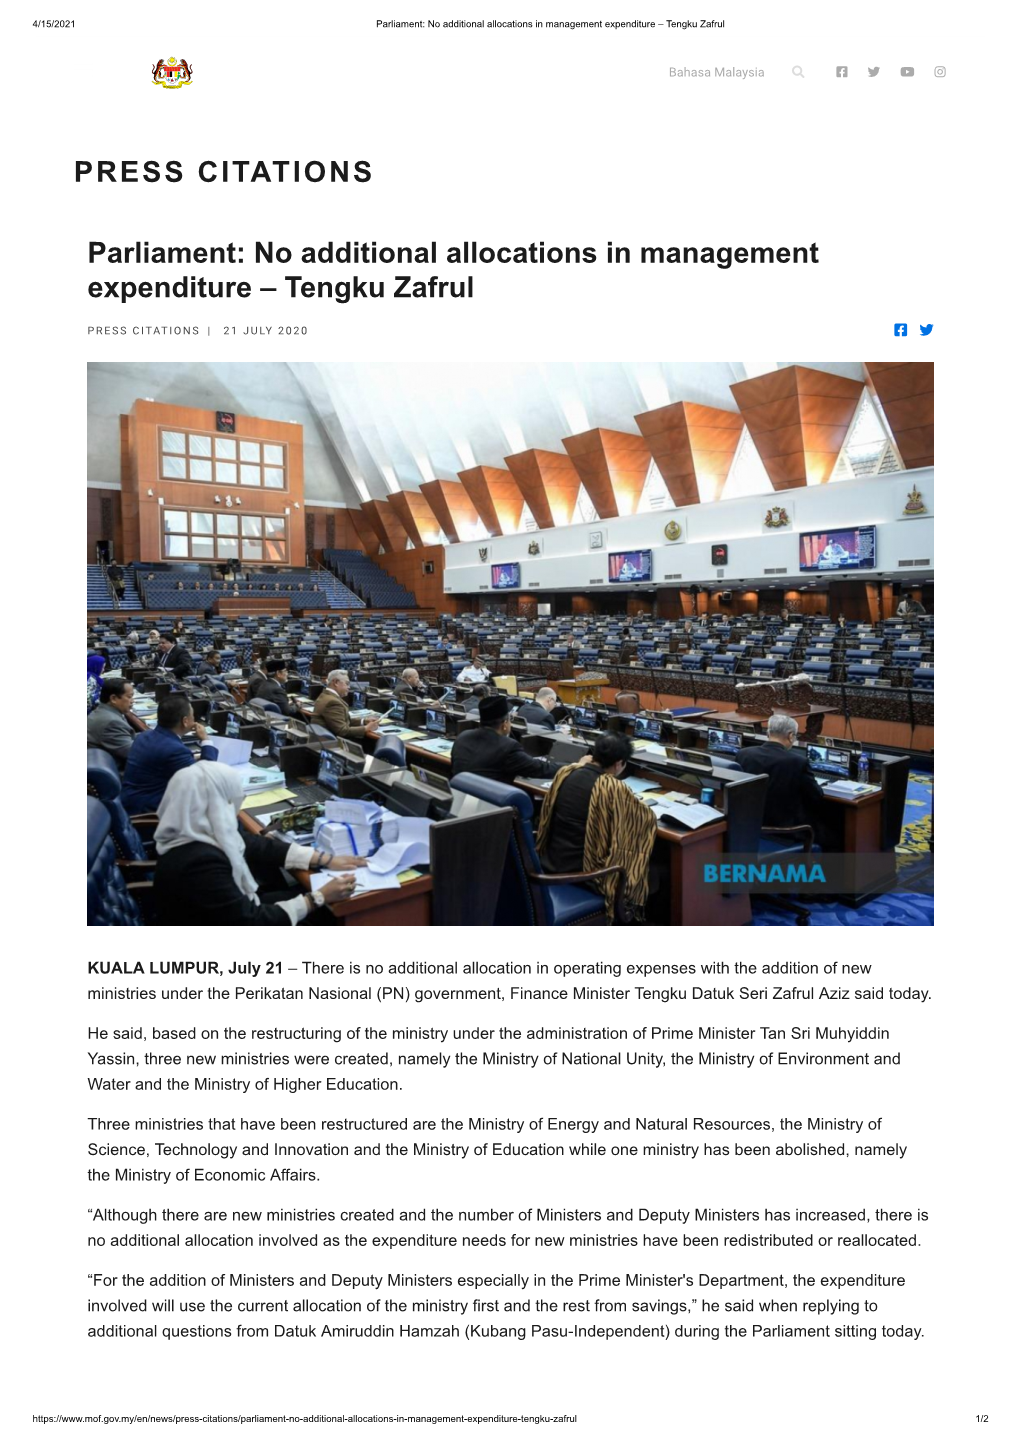 PRESS CITATIONS Parliament: No Additional Allocations in Management Expenditure – Tengku Zafrul